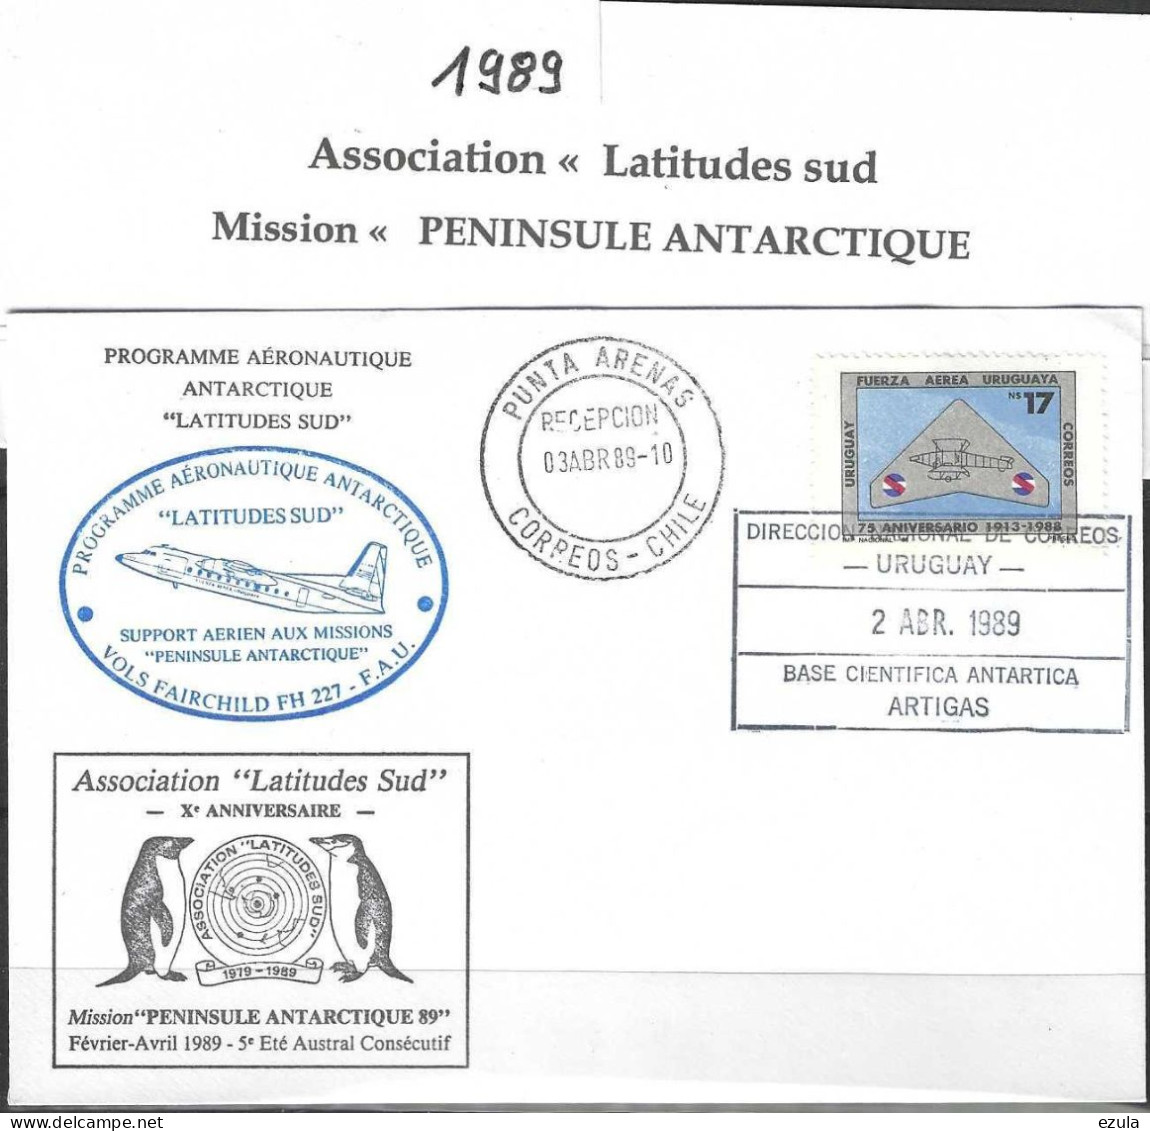 Uruguay -Association Latitude Sud  Mission Péninsule Antarctique 89 - International Polar Year